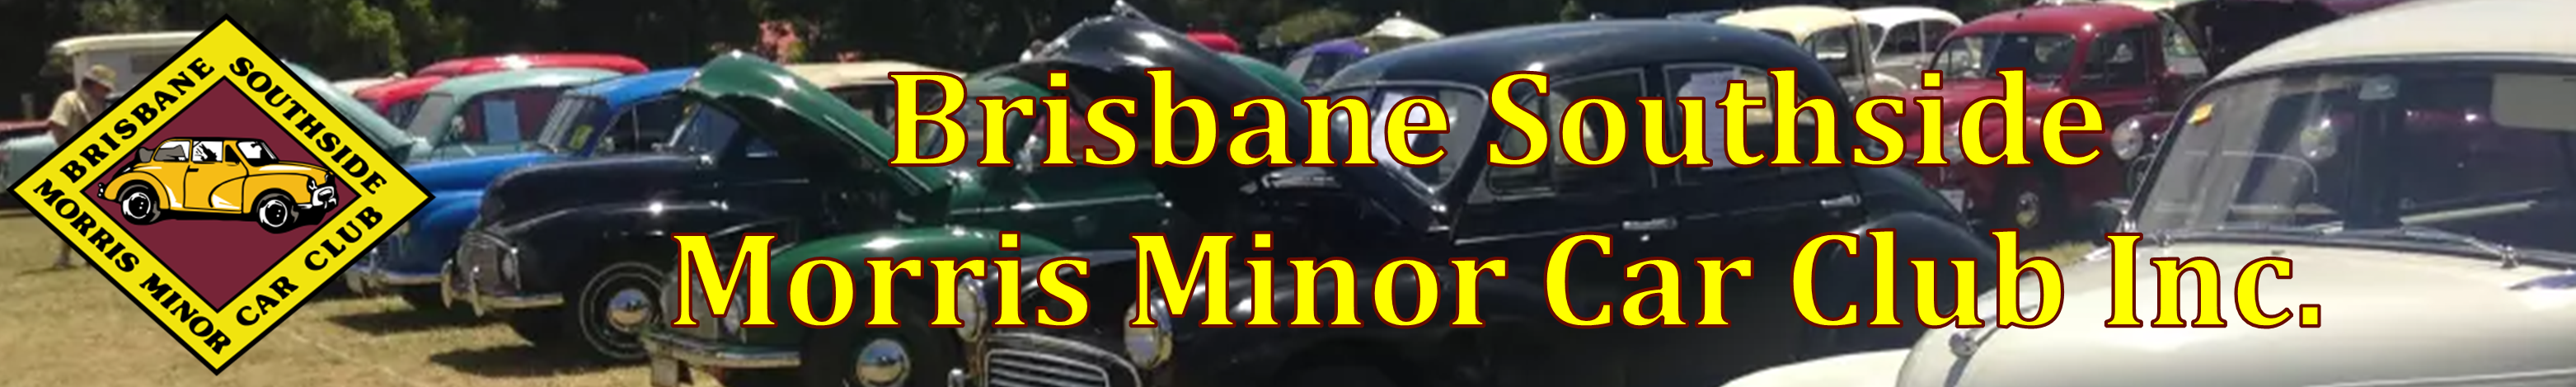 BSMMCC - Brisbane Southside Morris Minor Car Club